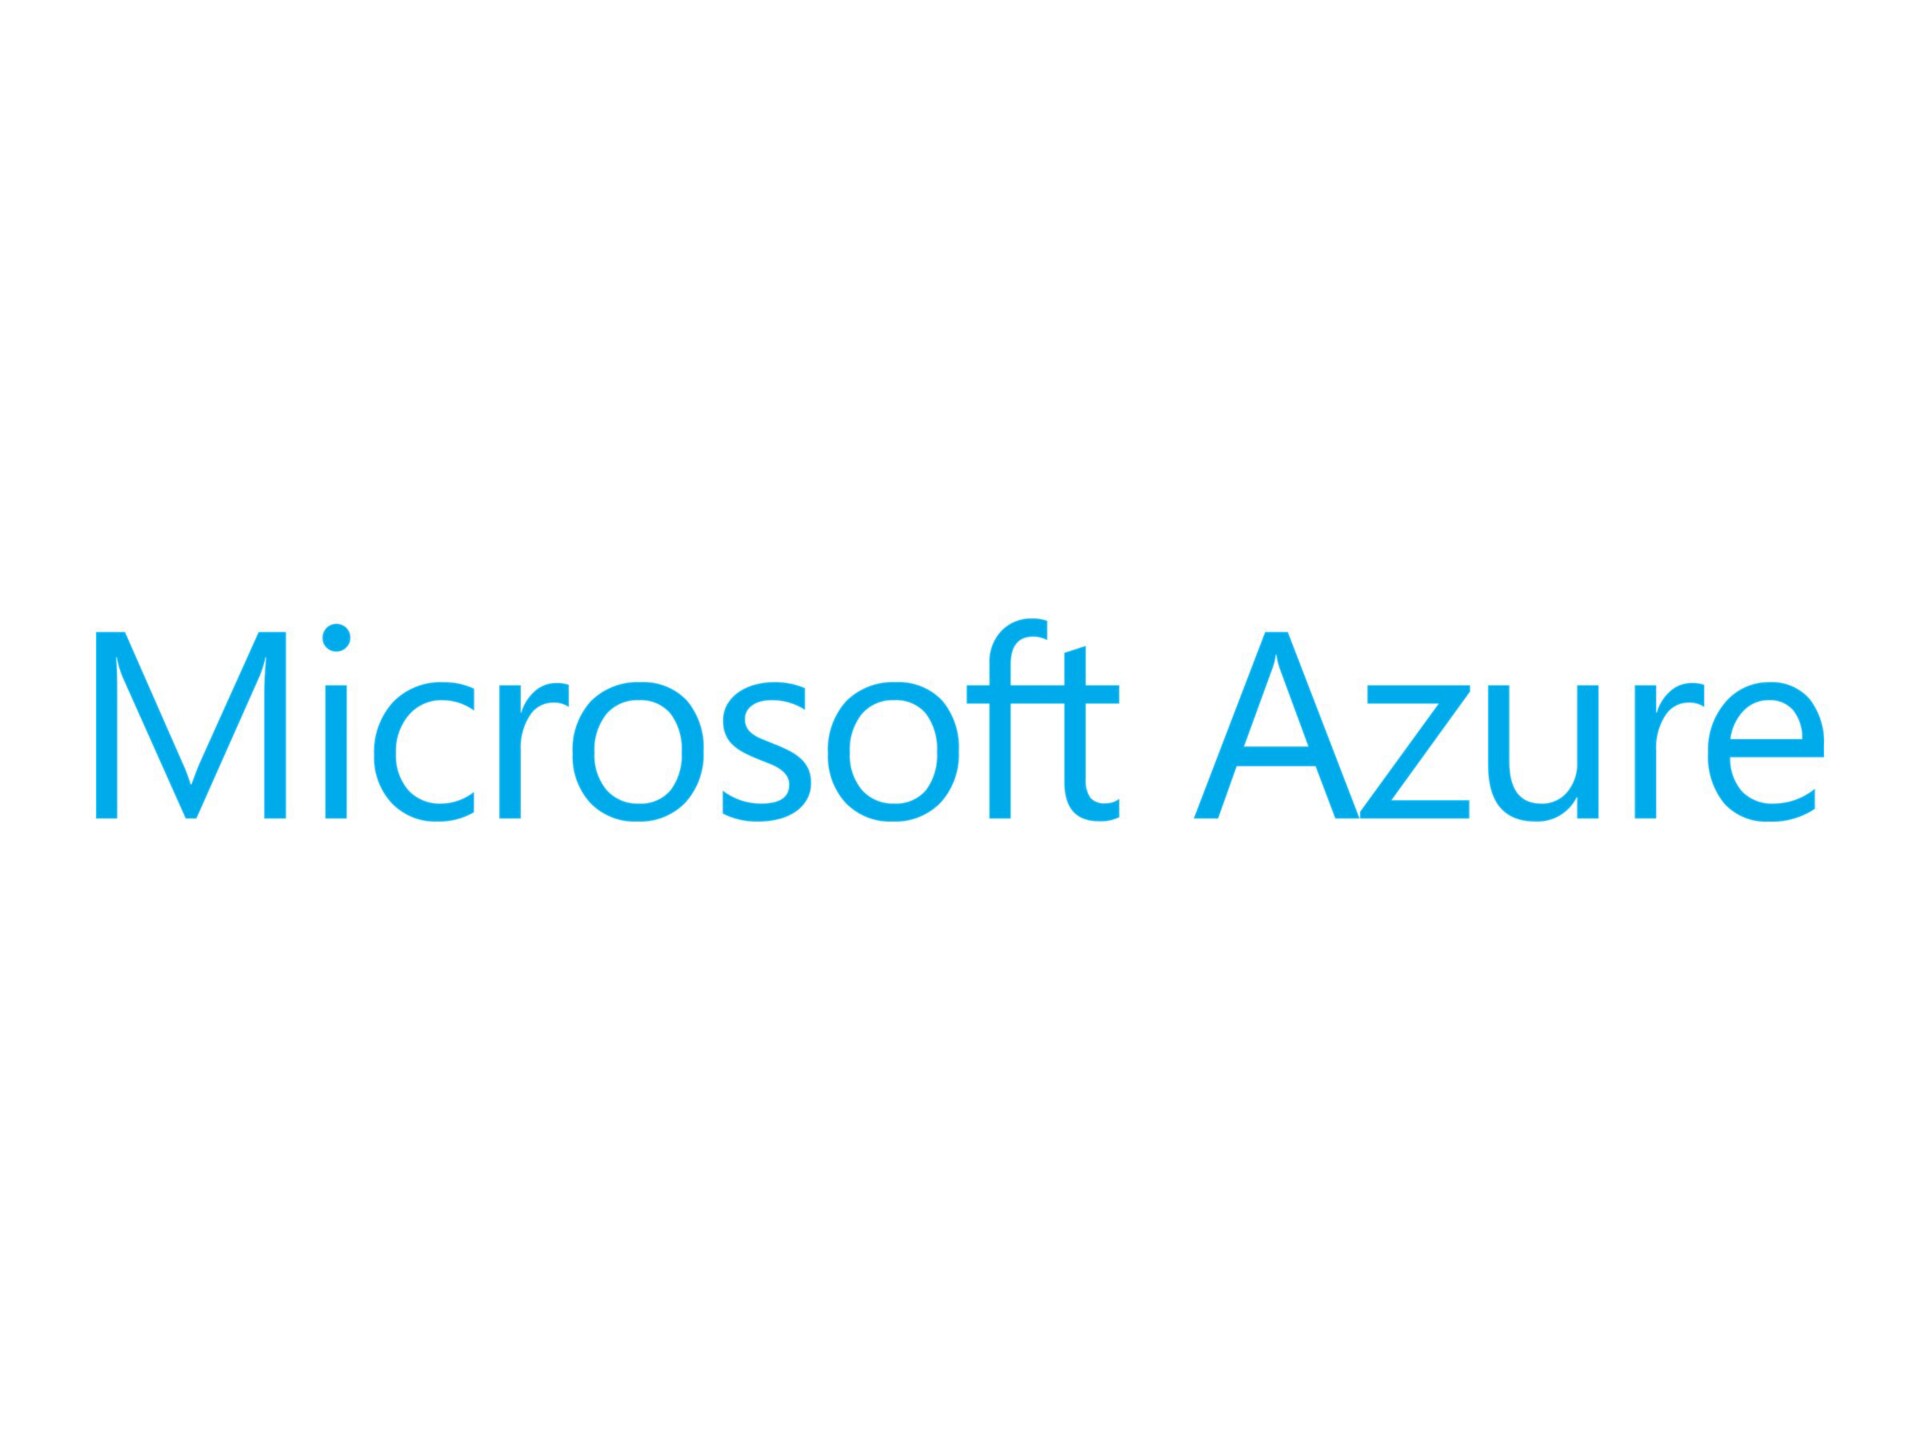 Microsoft Azure Networking - overage fee - 100 GB capacity